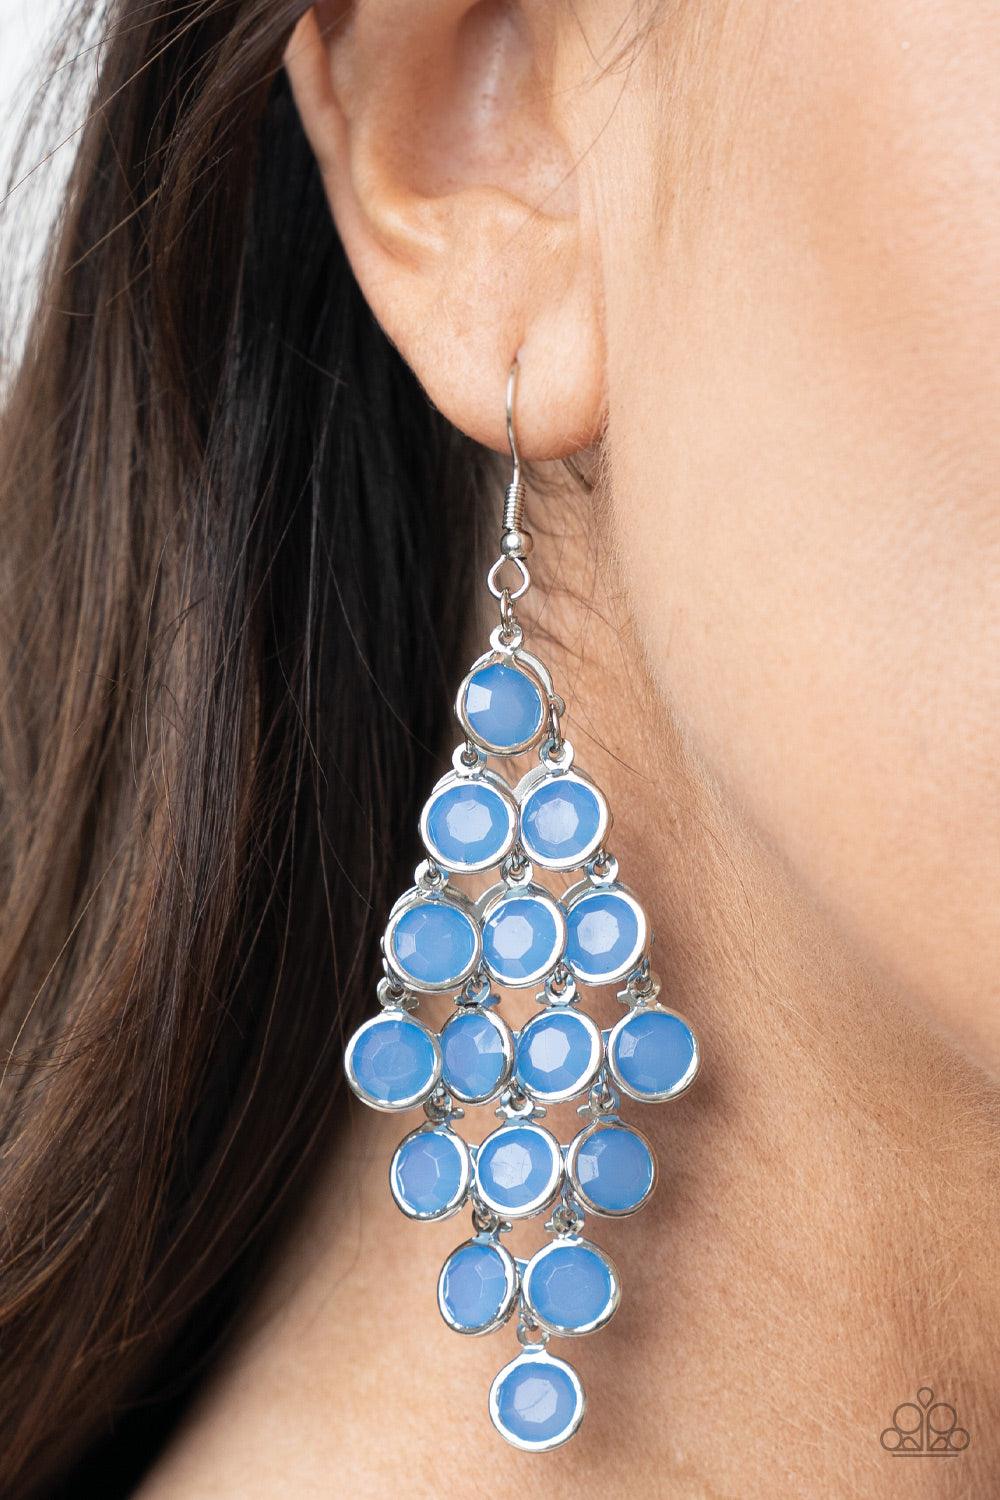 With All DEW Respect Blue Earrings - Jewelry by Bretta